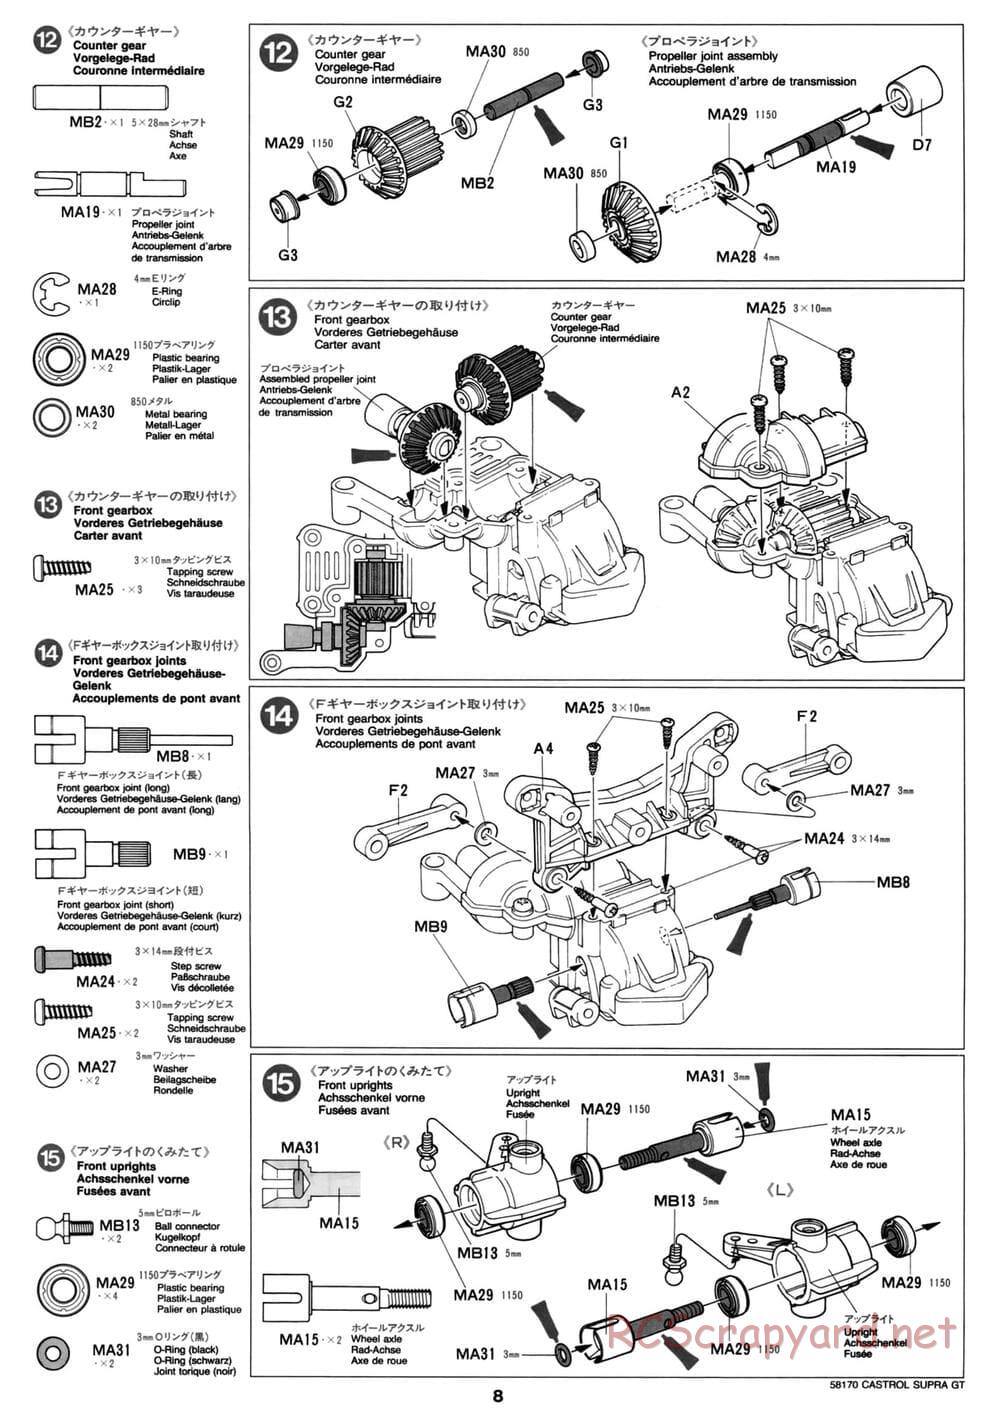 Tamiya - Castrol Toyota Tom's Supra GT - TA-02W Chassis - Manual - Page 8